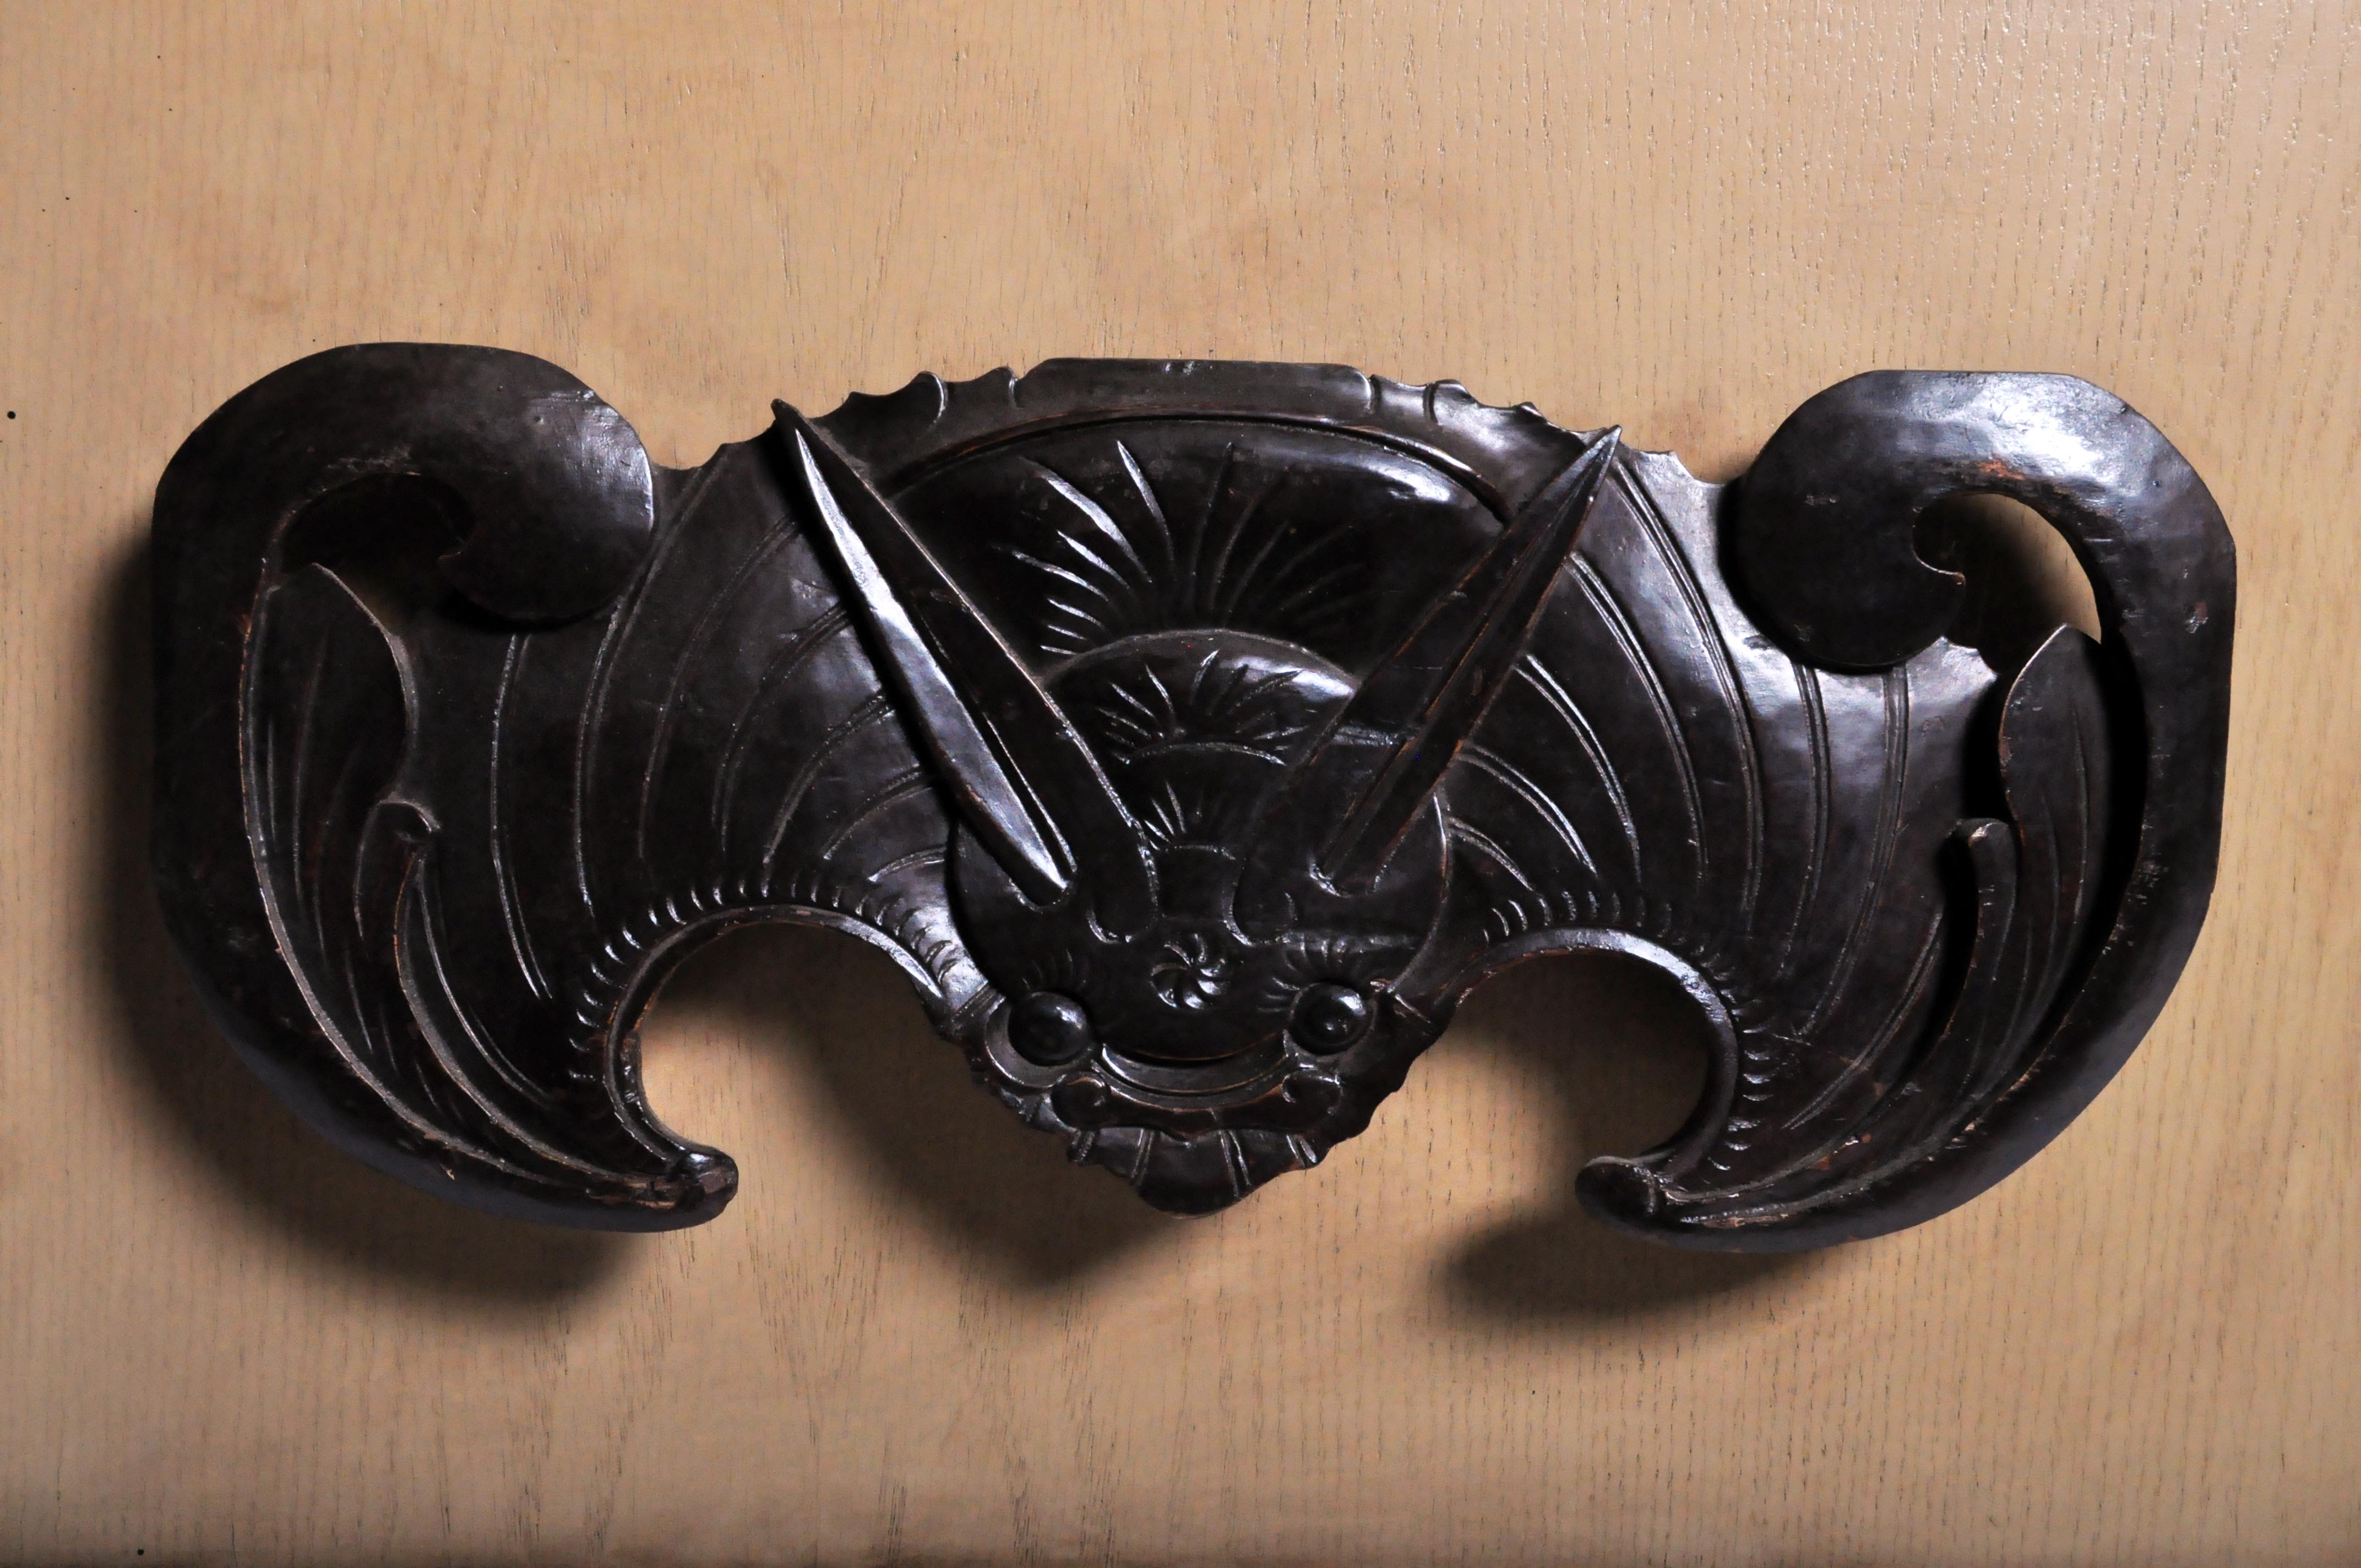 Carved Wooden Bats 6